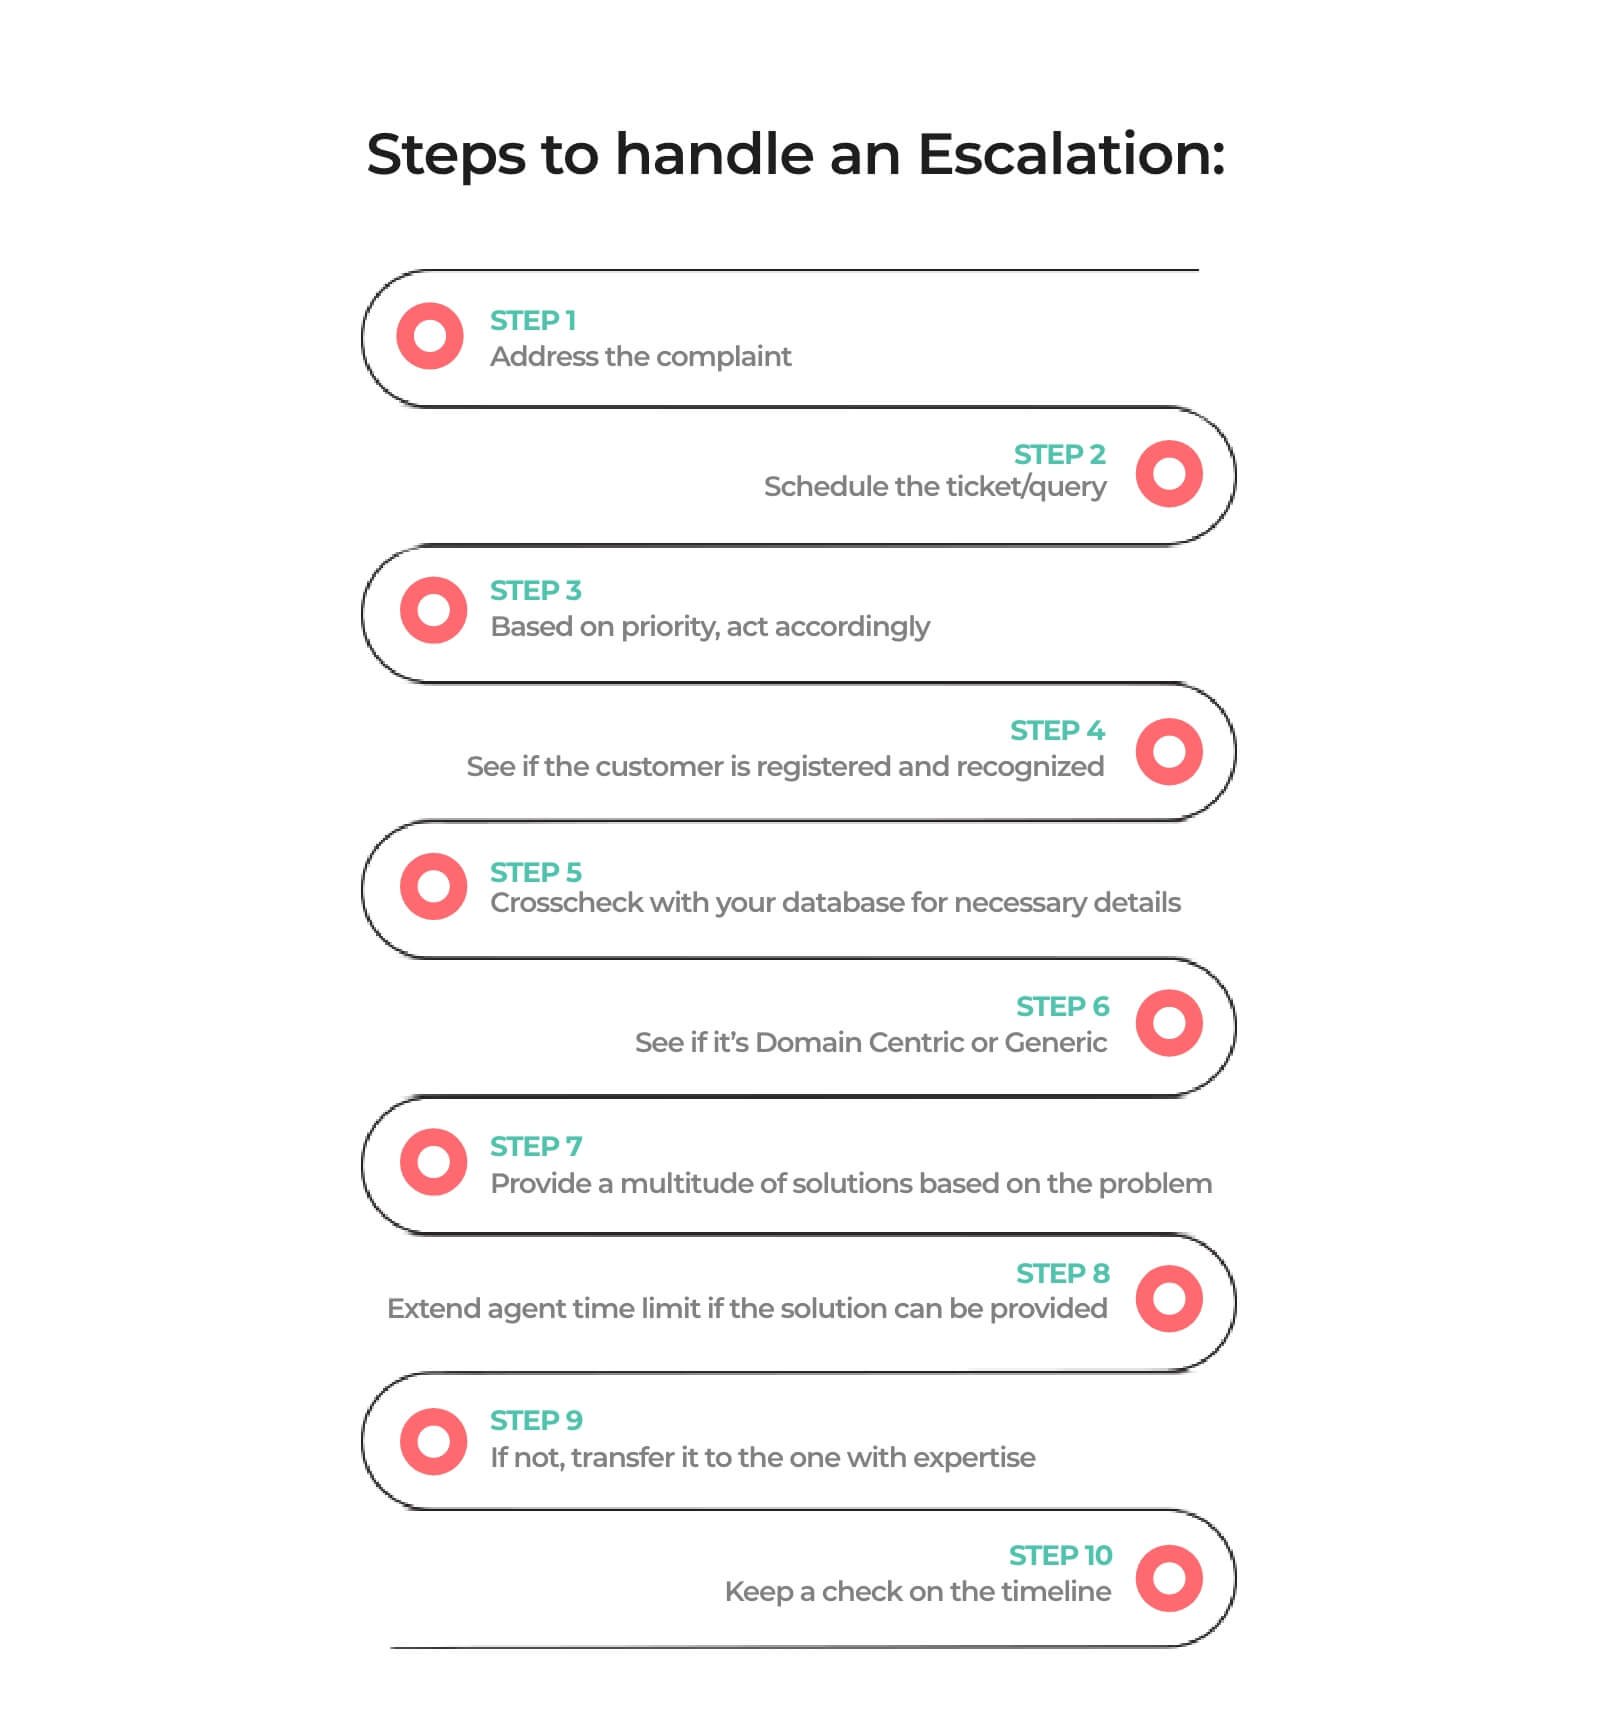 Steps to handle escalation